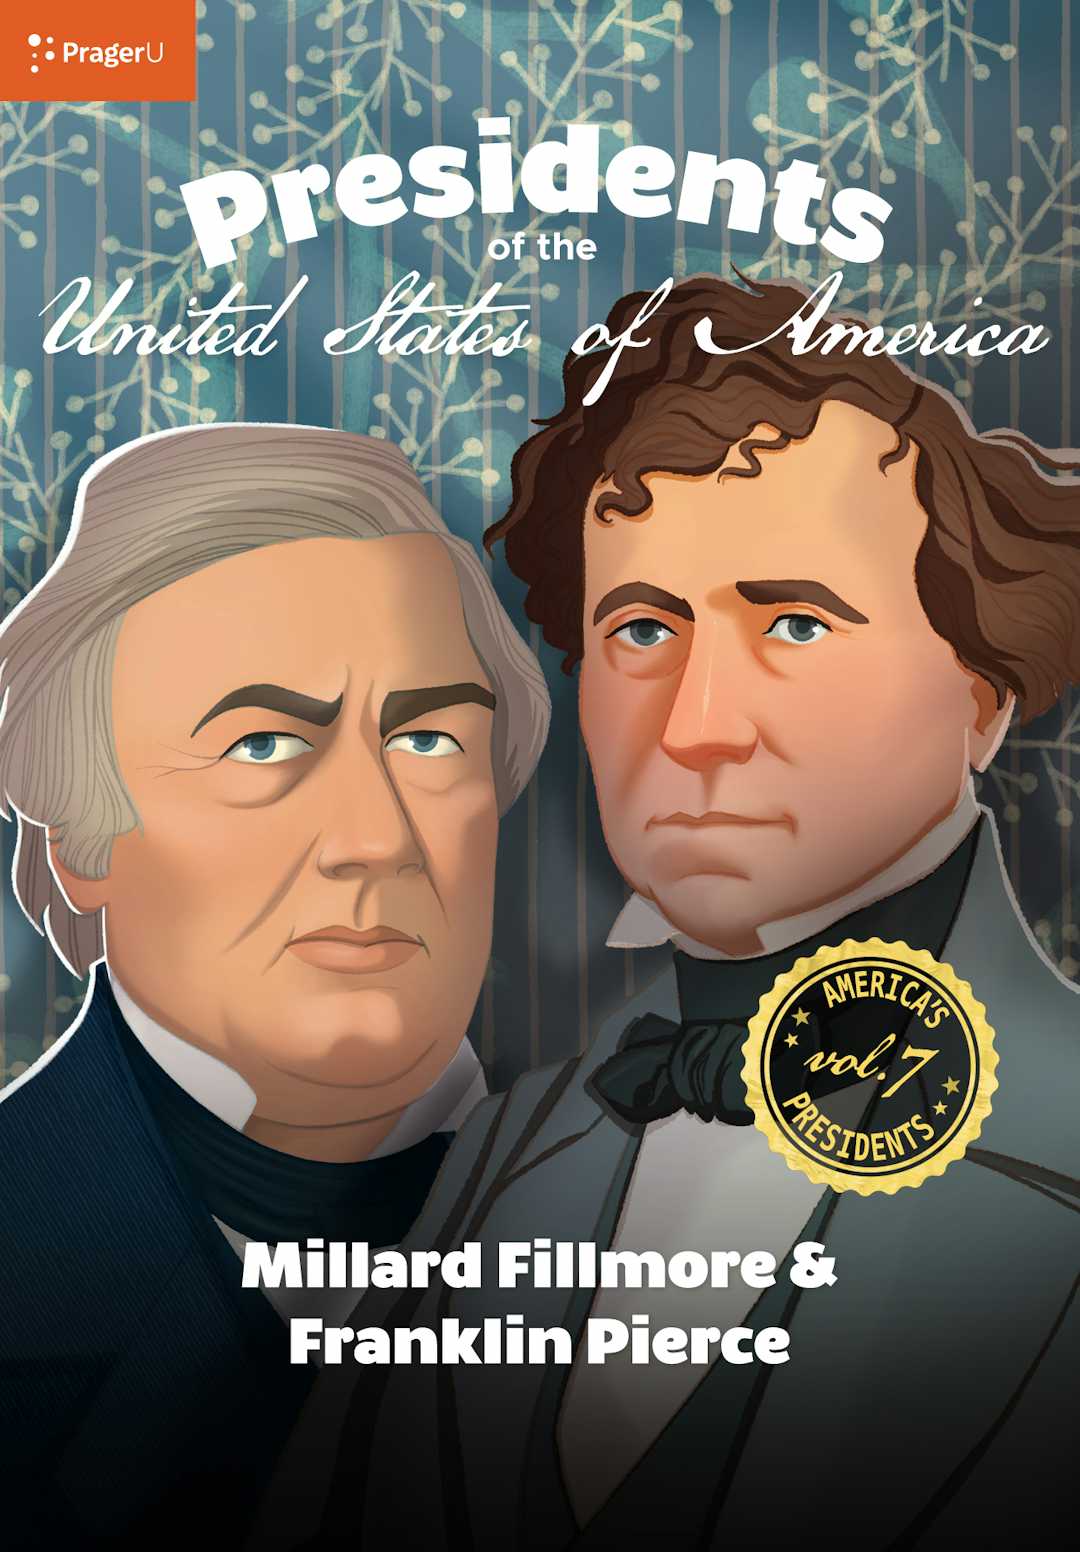 U.S. Presidents Volume 7: Millard Fillmore & Franklin Pierce